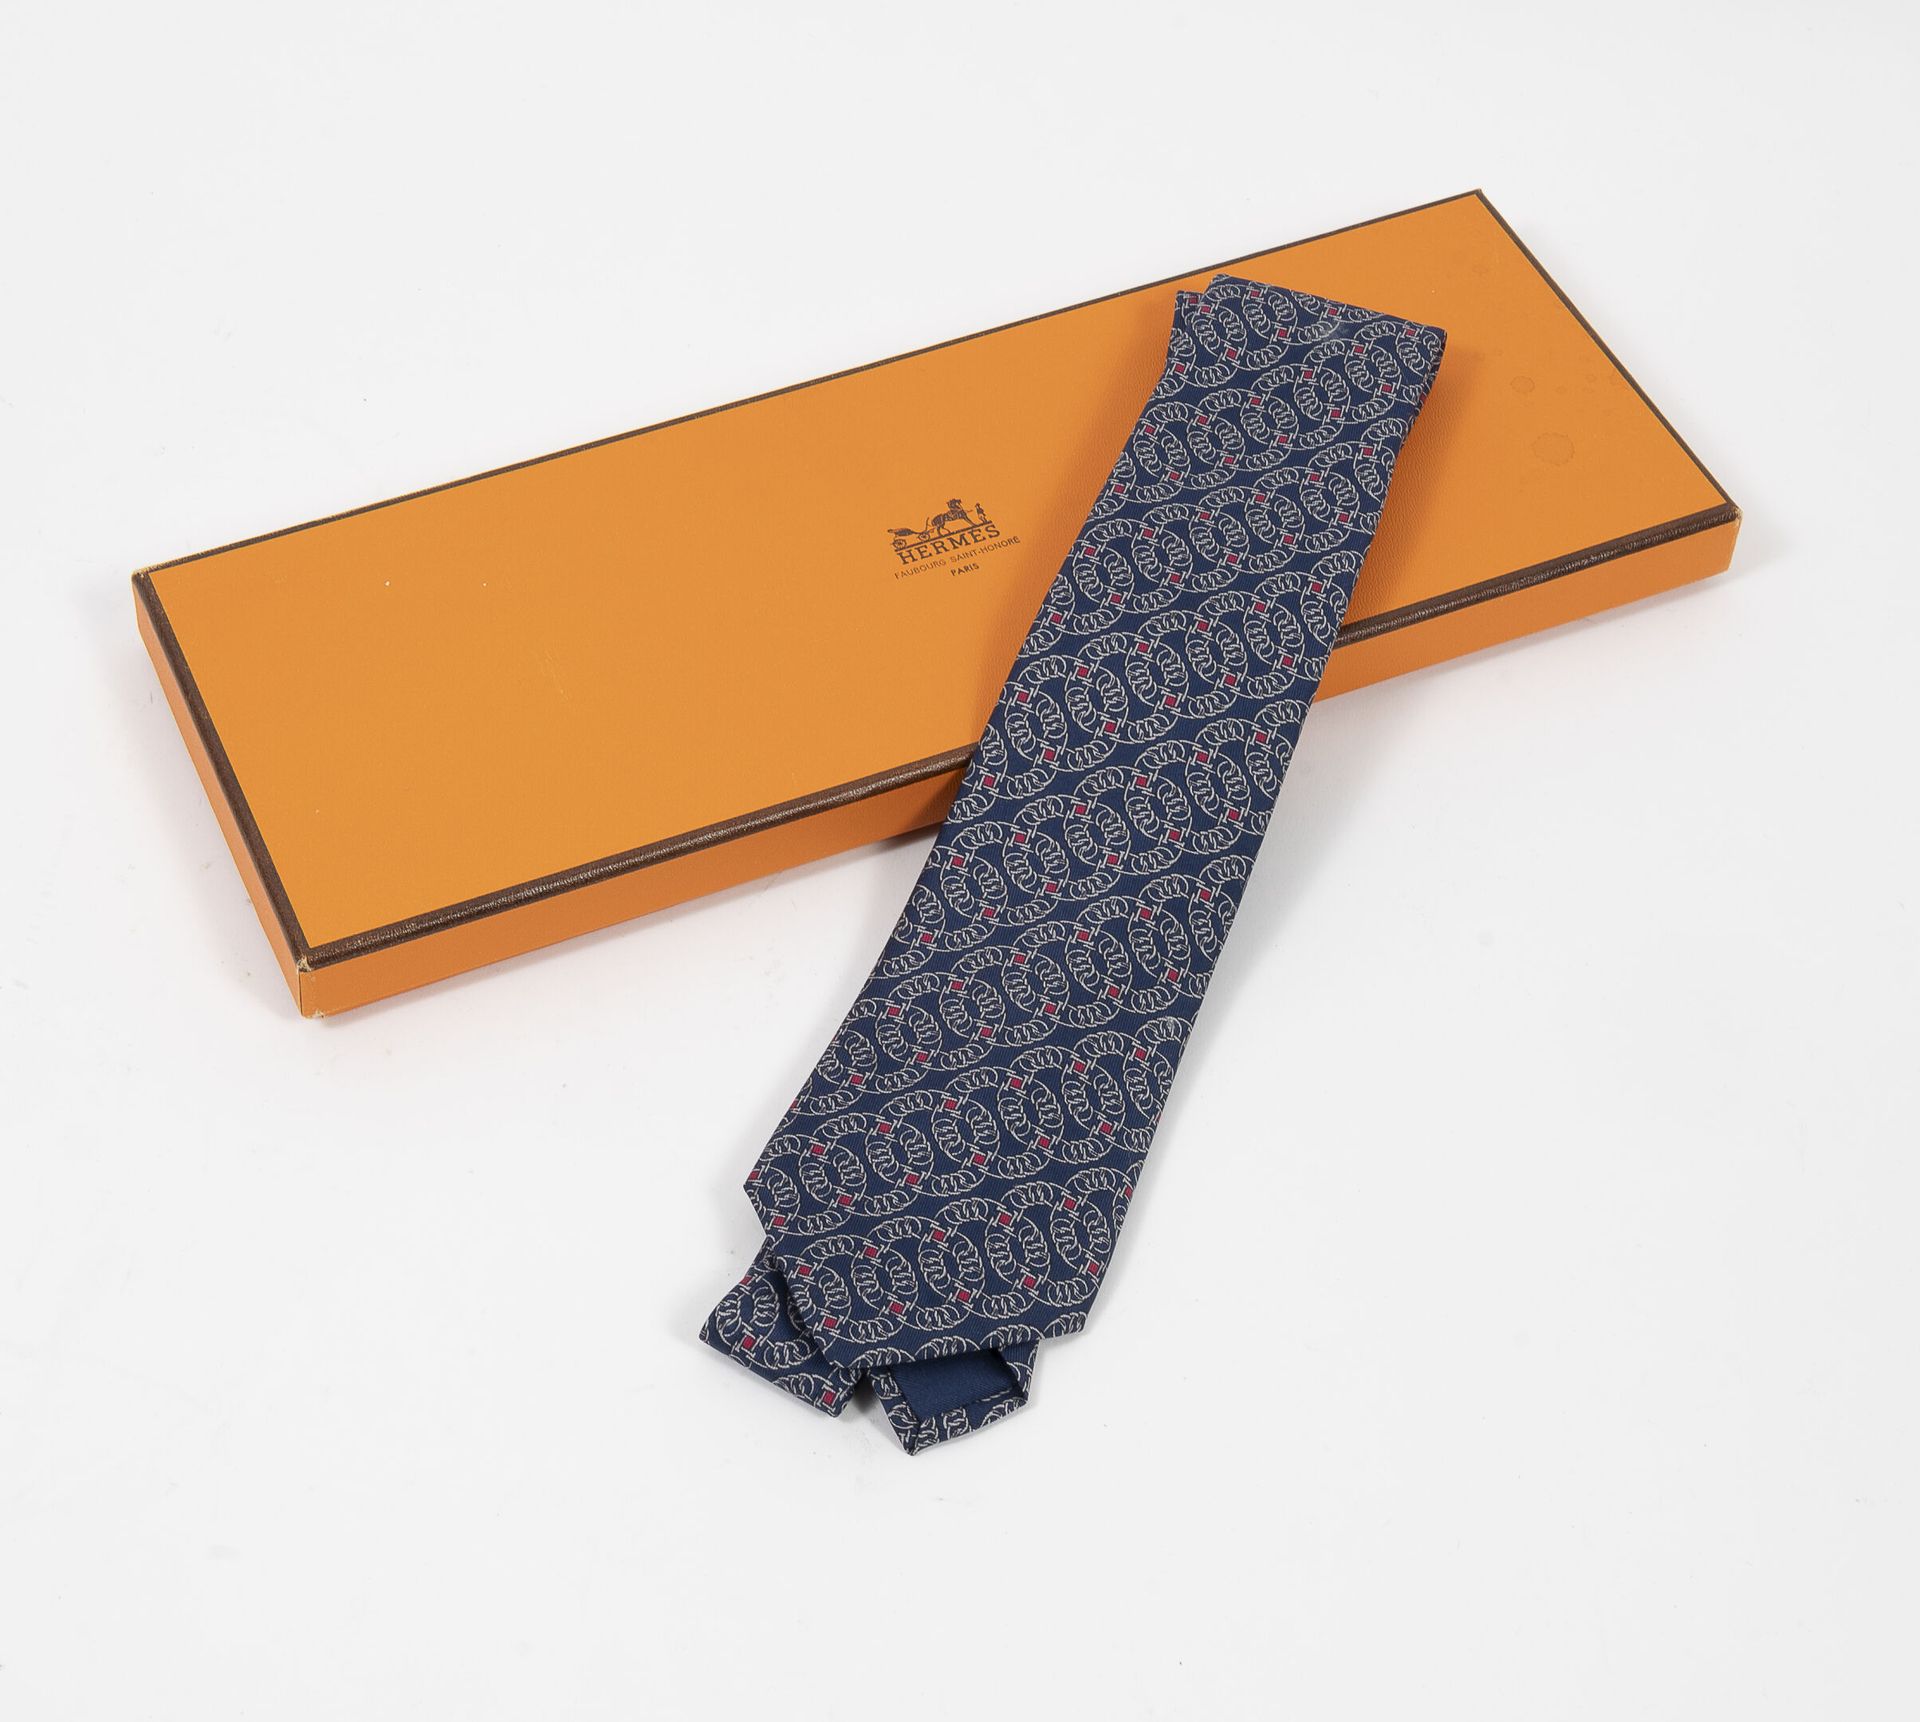 HERMES Paris 蓝色背景的丝绸斜纹领带。

最大宽度：8厘米。

签名。 

小污点。

有原版盒子。